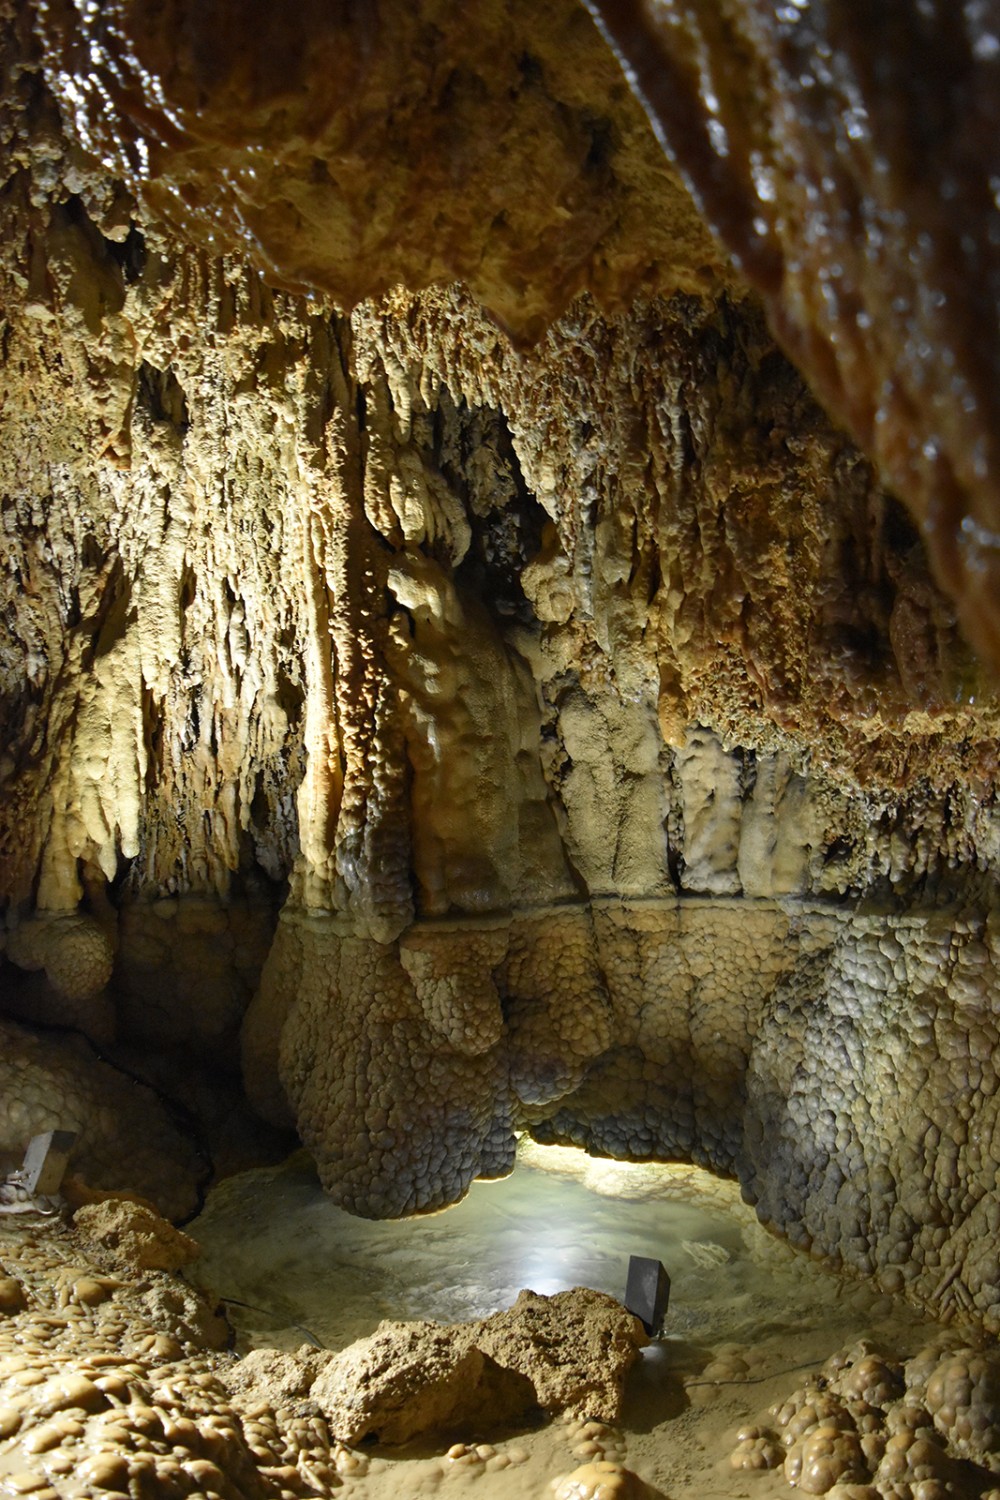 Les extraordinaires grottes de stalagmites et stalactites valent le voyage. Photo: Nathalie Stöckli